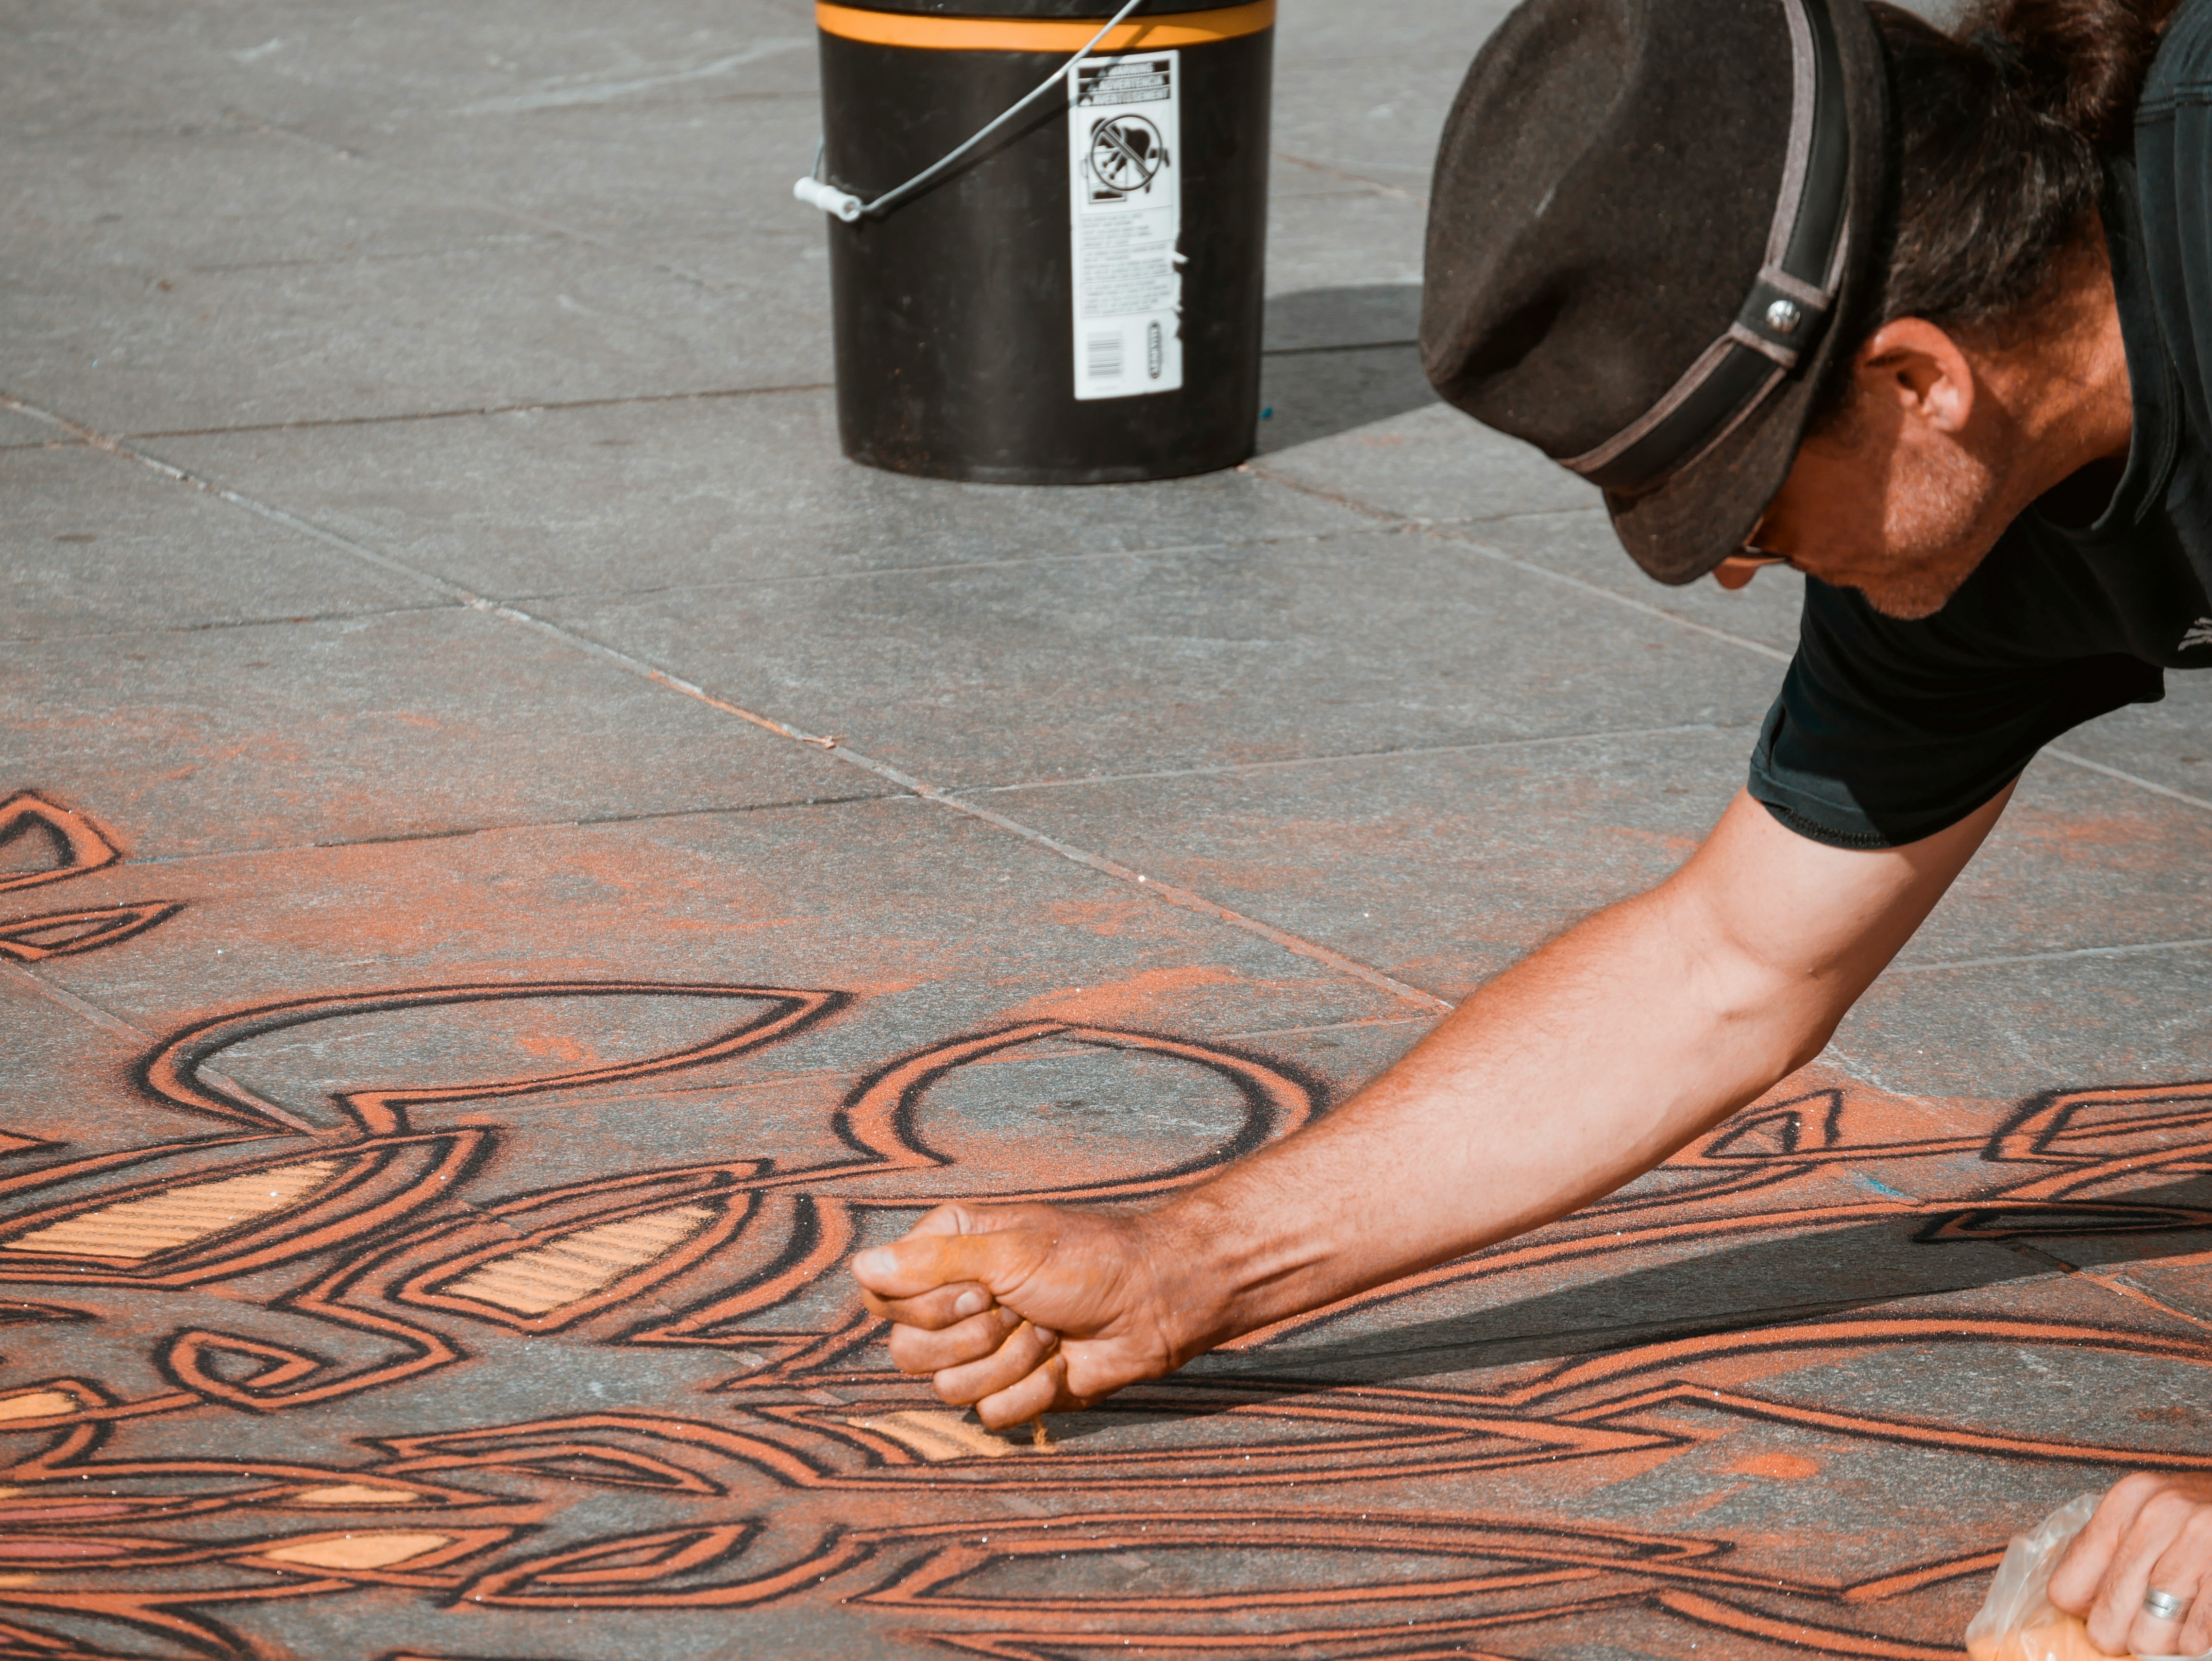 man making sand artwork on the floor